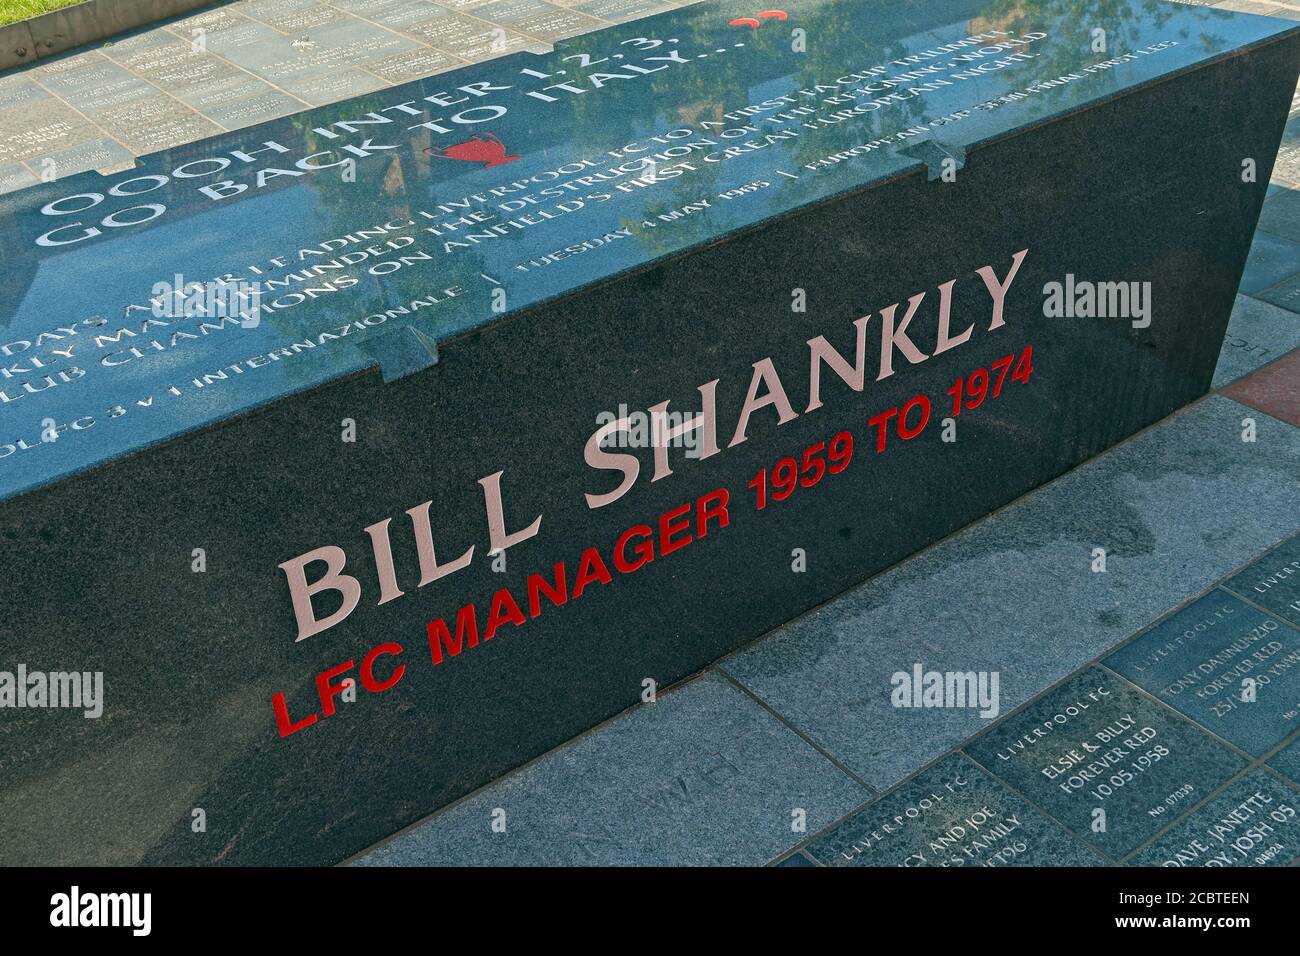 Bill Shankly Stone 1959-1974, LFC,Liverpool Football Club, Anfield, Premier League, Merseyside,North West England, UK, L4 2UZ Foto de stock